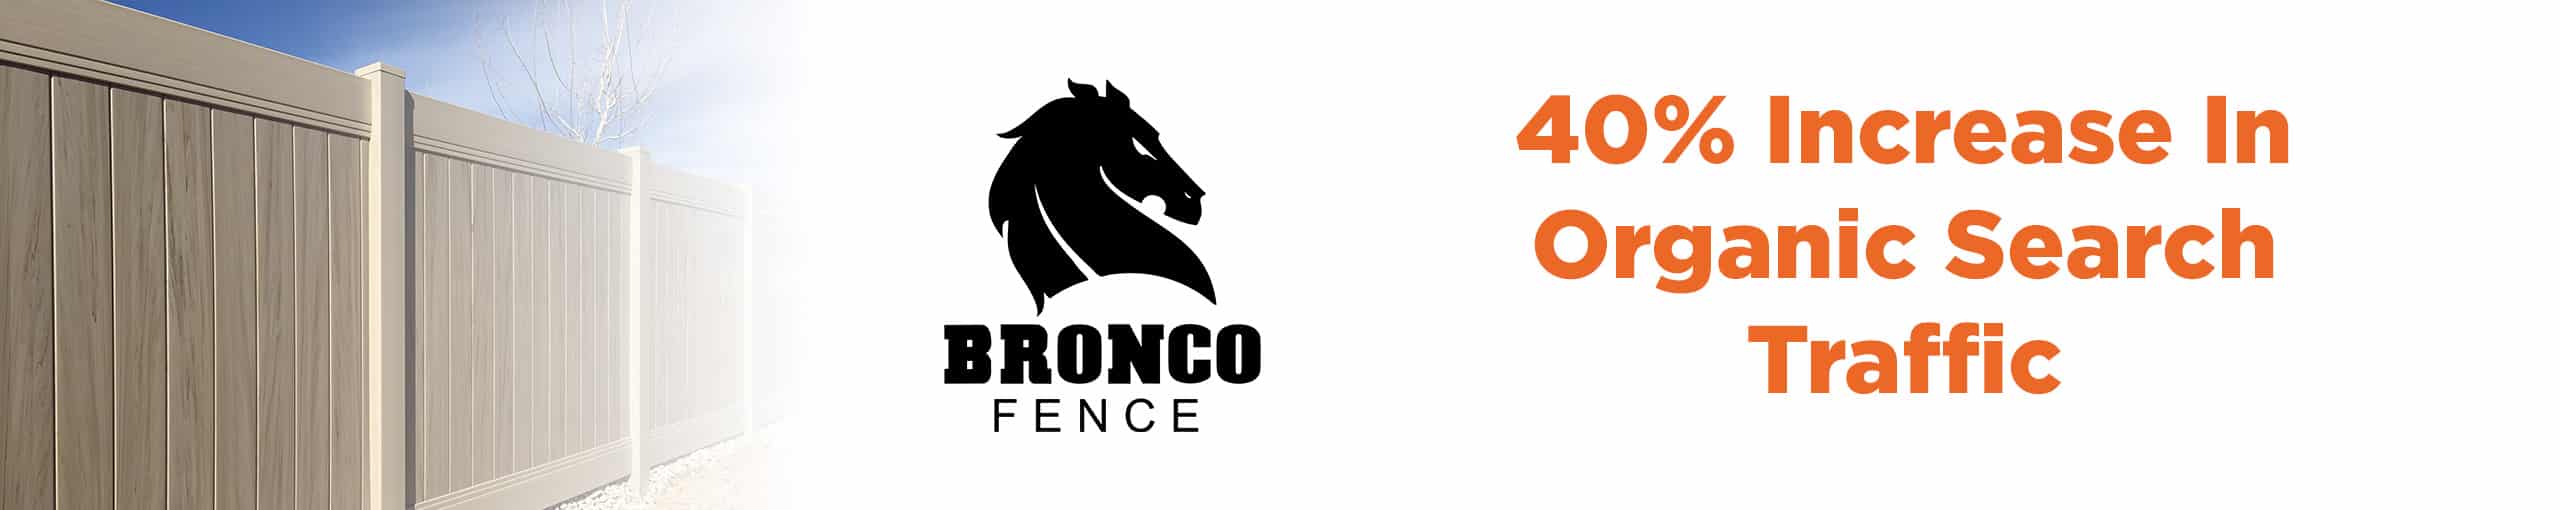 Bronco Fence banner Performance Driven Marketing Ogden UT